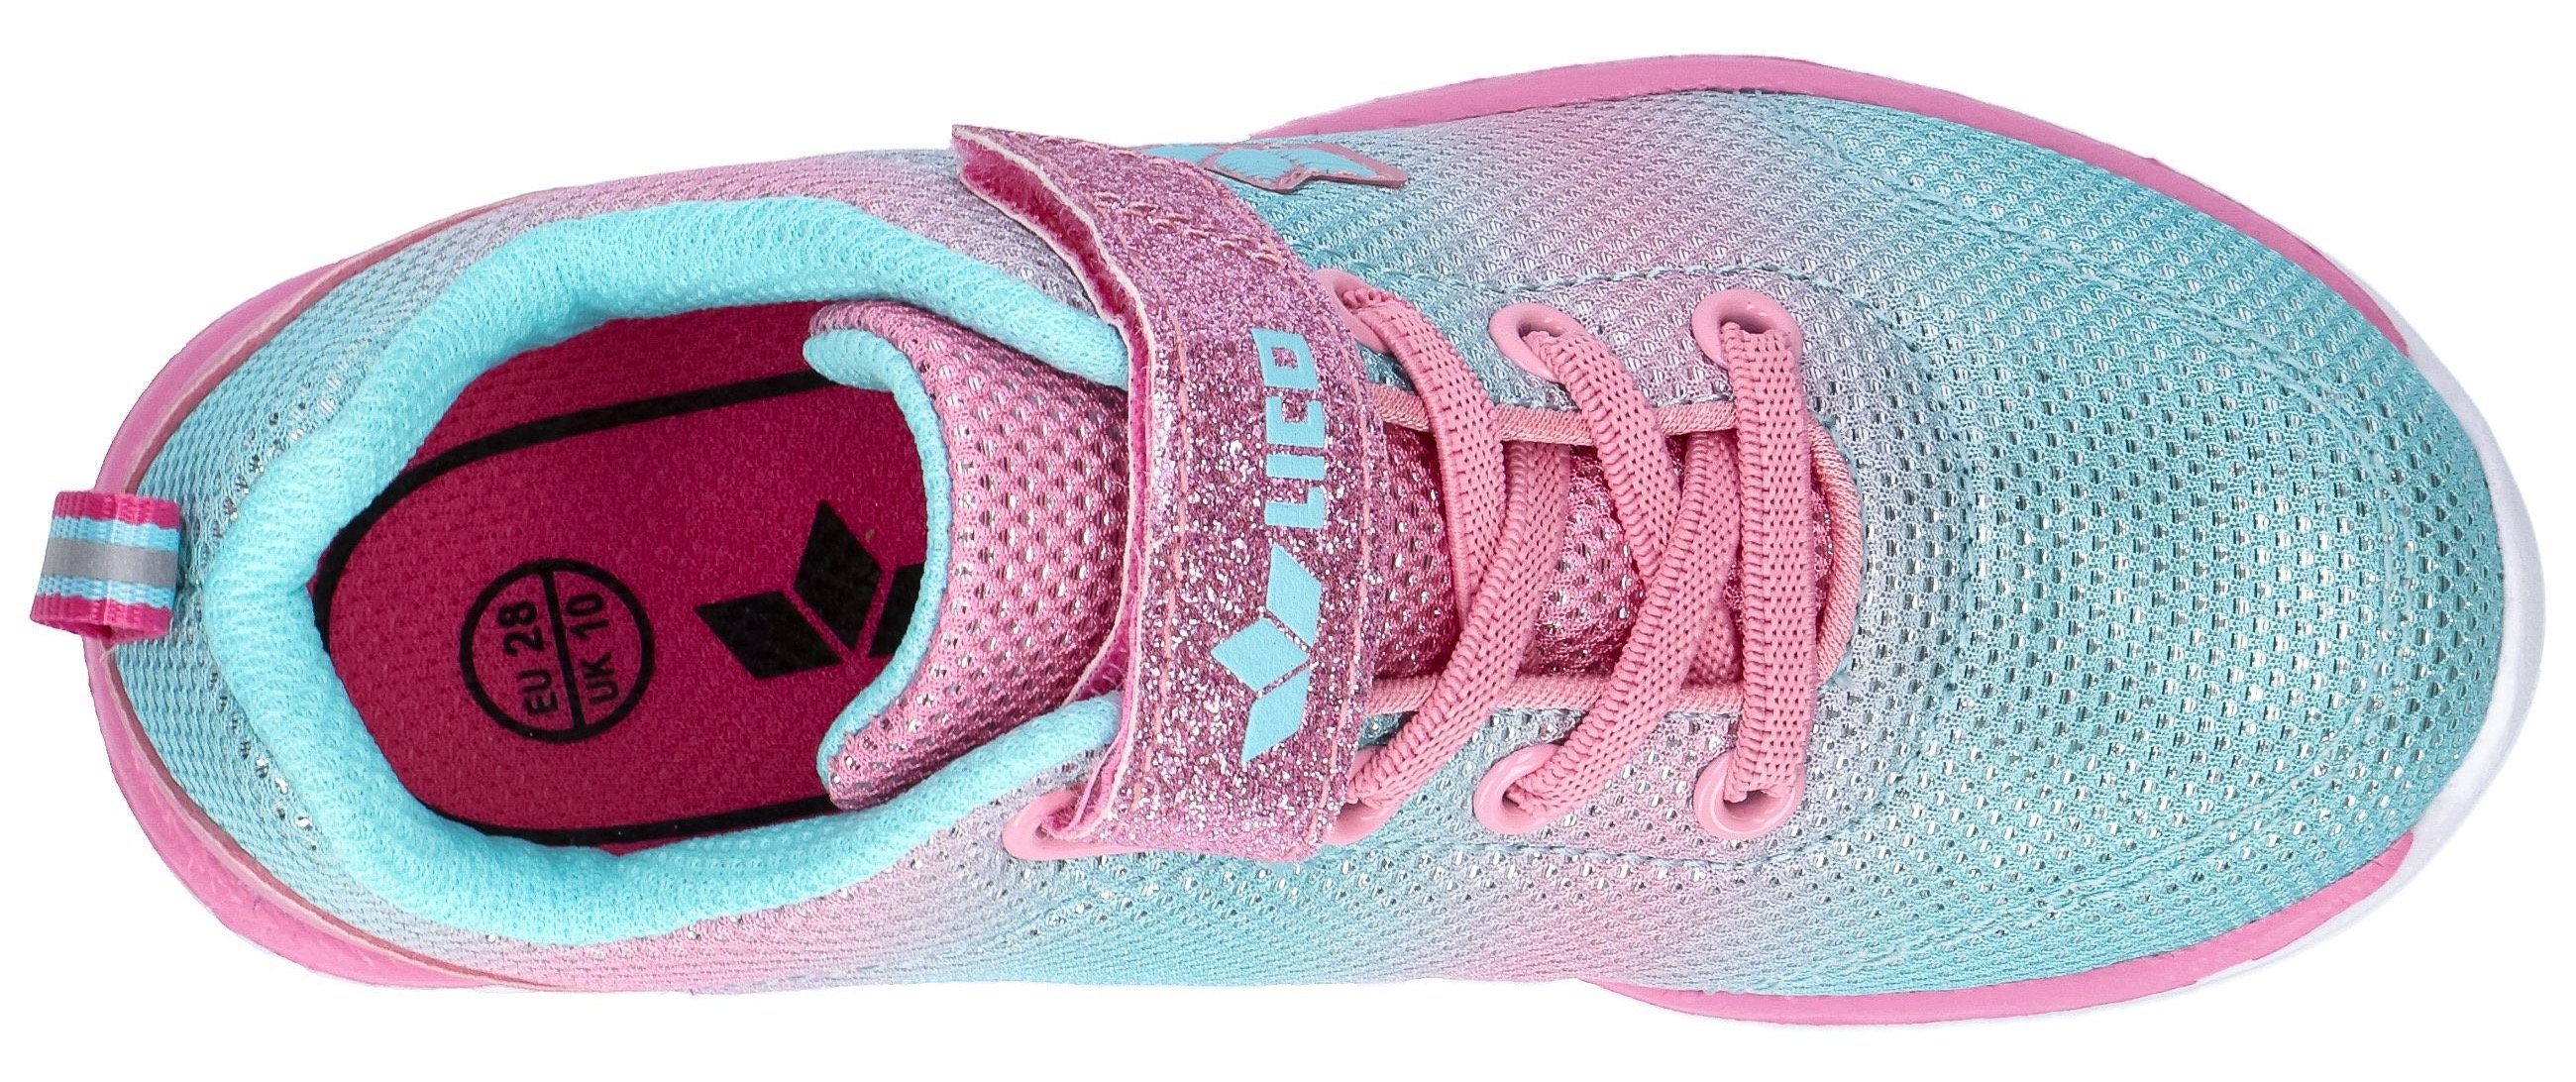 Alenia Pastellfarben VS WMS Lico Sneaker in glitzernden rosa/türkis